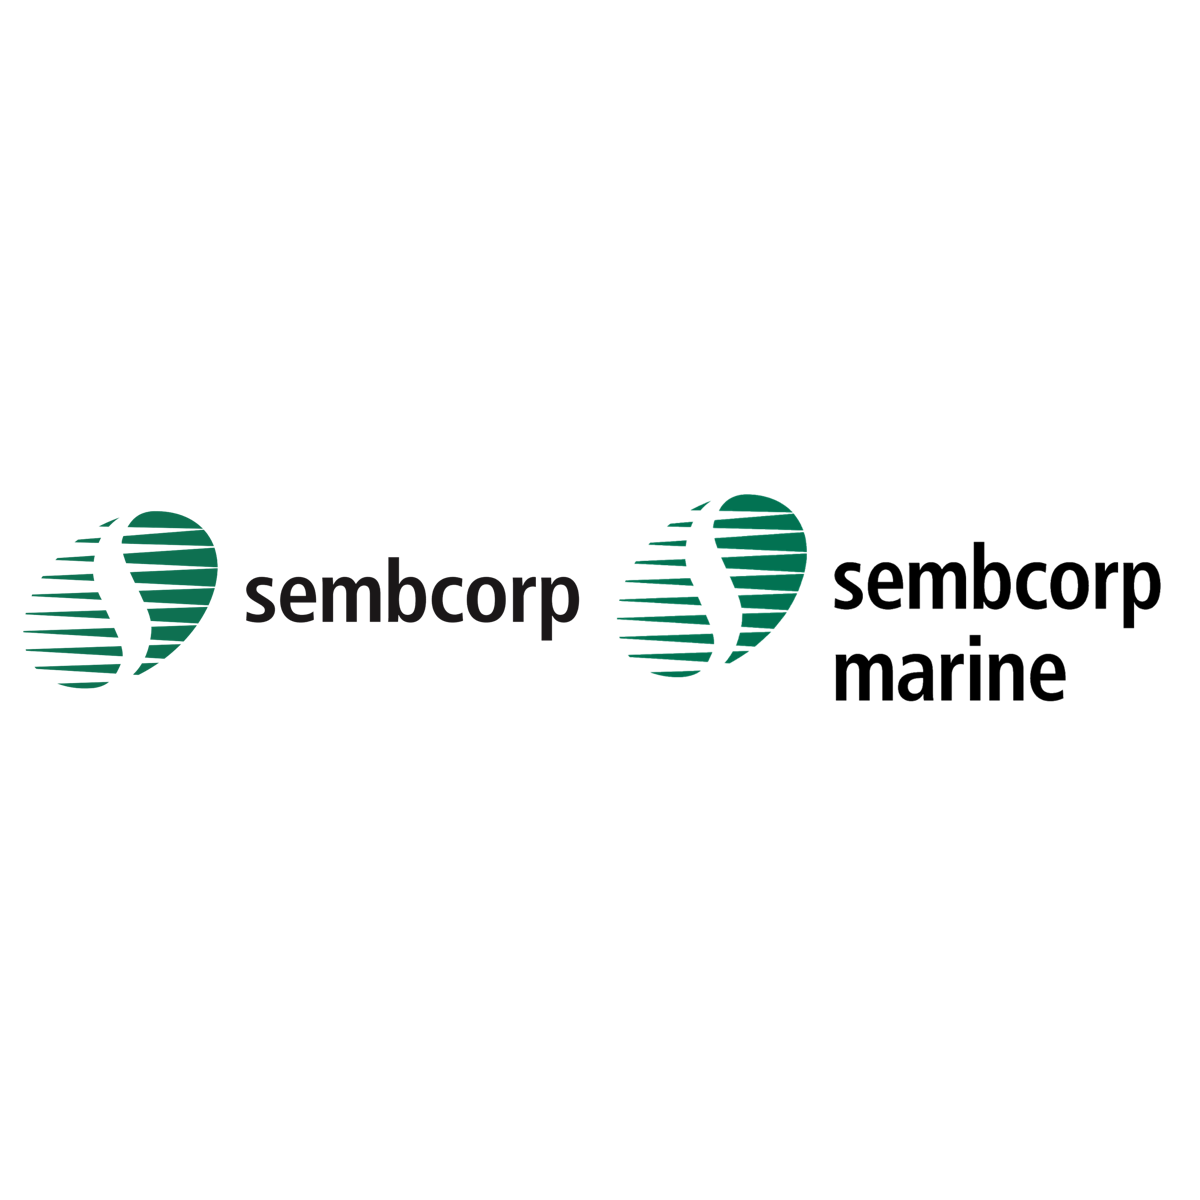 Sembcorp Industries Sembcorp Marine Uob Kay Hian 2020 06 09 A Sea Change Sginvestors Io Where Sg Investors Share